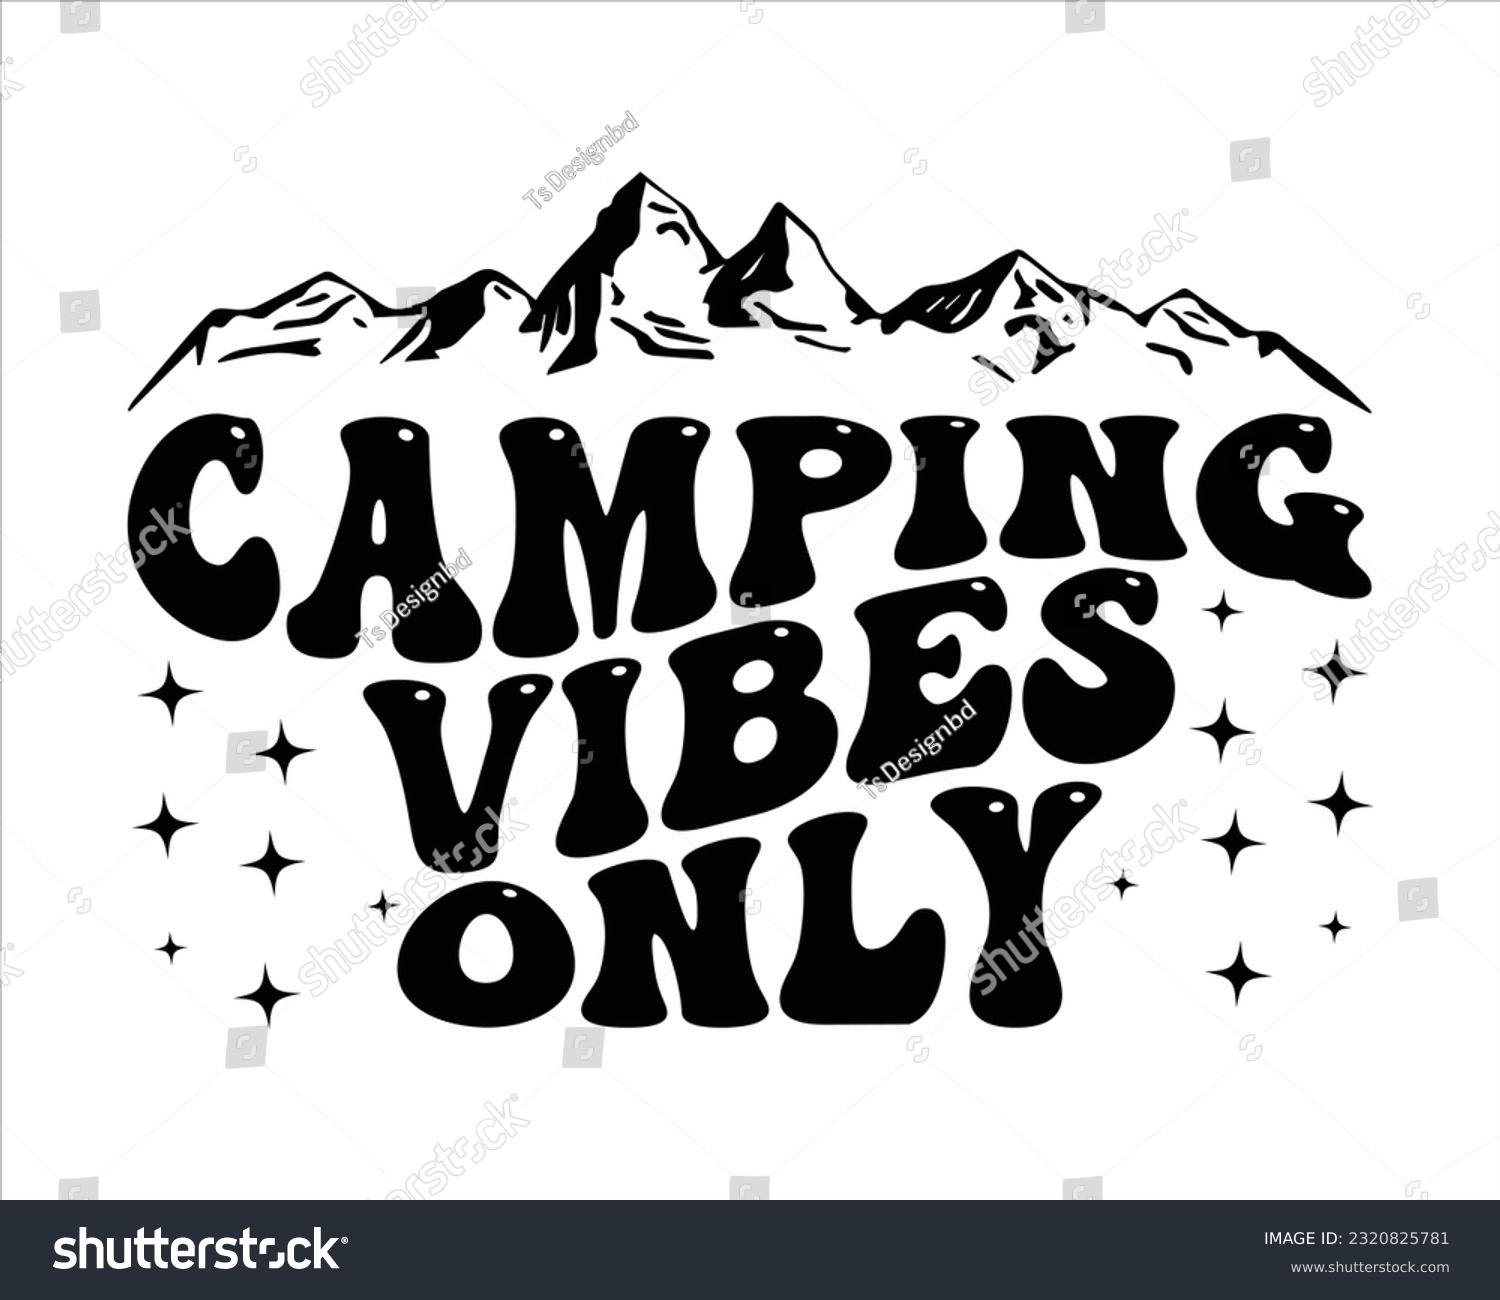 SVG of Camping vibes only Retro Svg Design,Hiking Retro Svg Design, Mountain illustration, outdoor adventure ,Outdoor Adventure Inspiring Motivation Quote, camping, hiking,groovy design svg